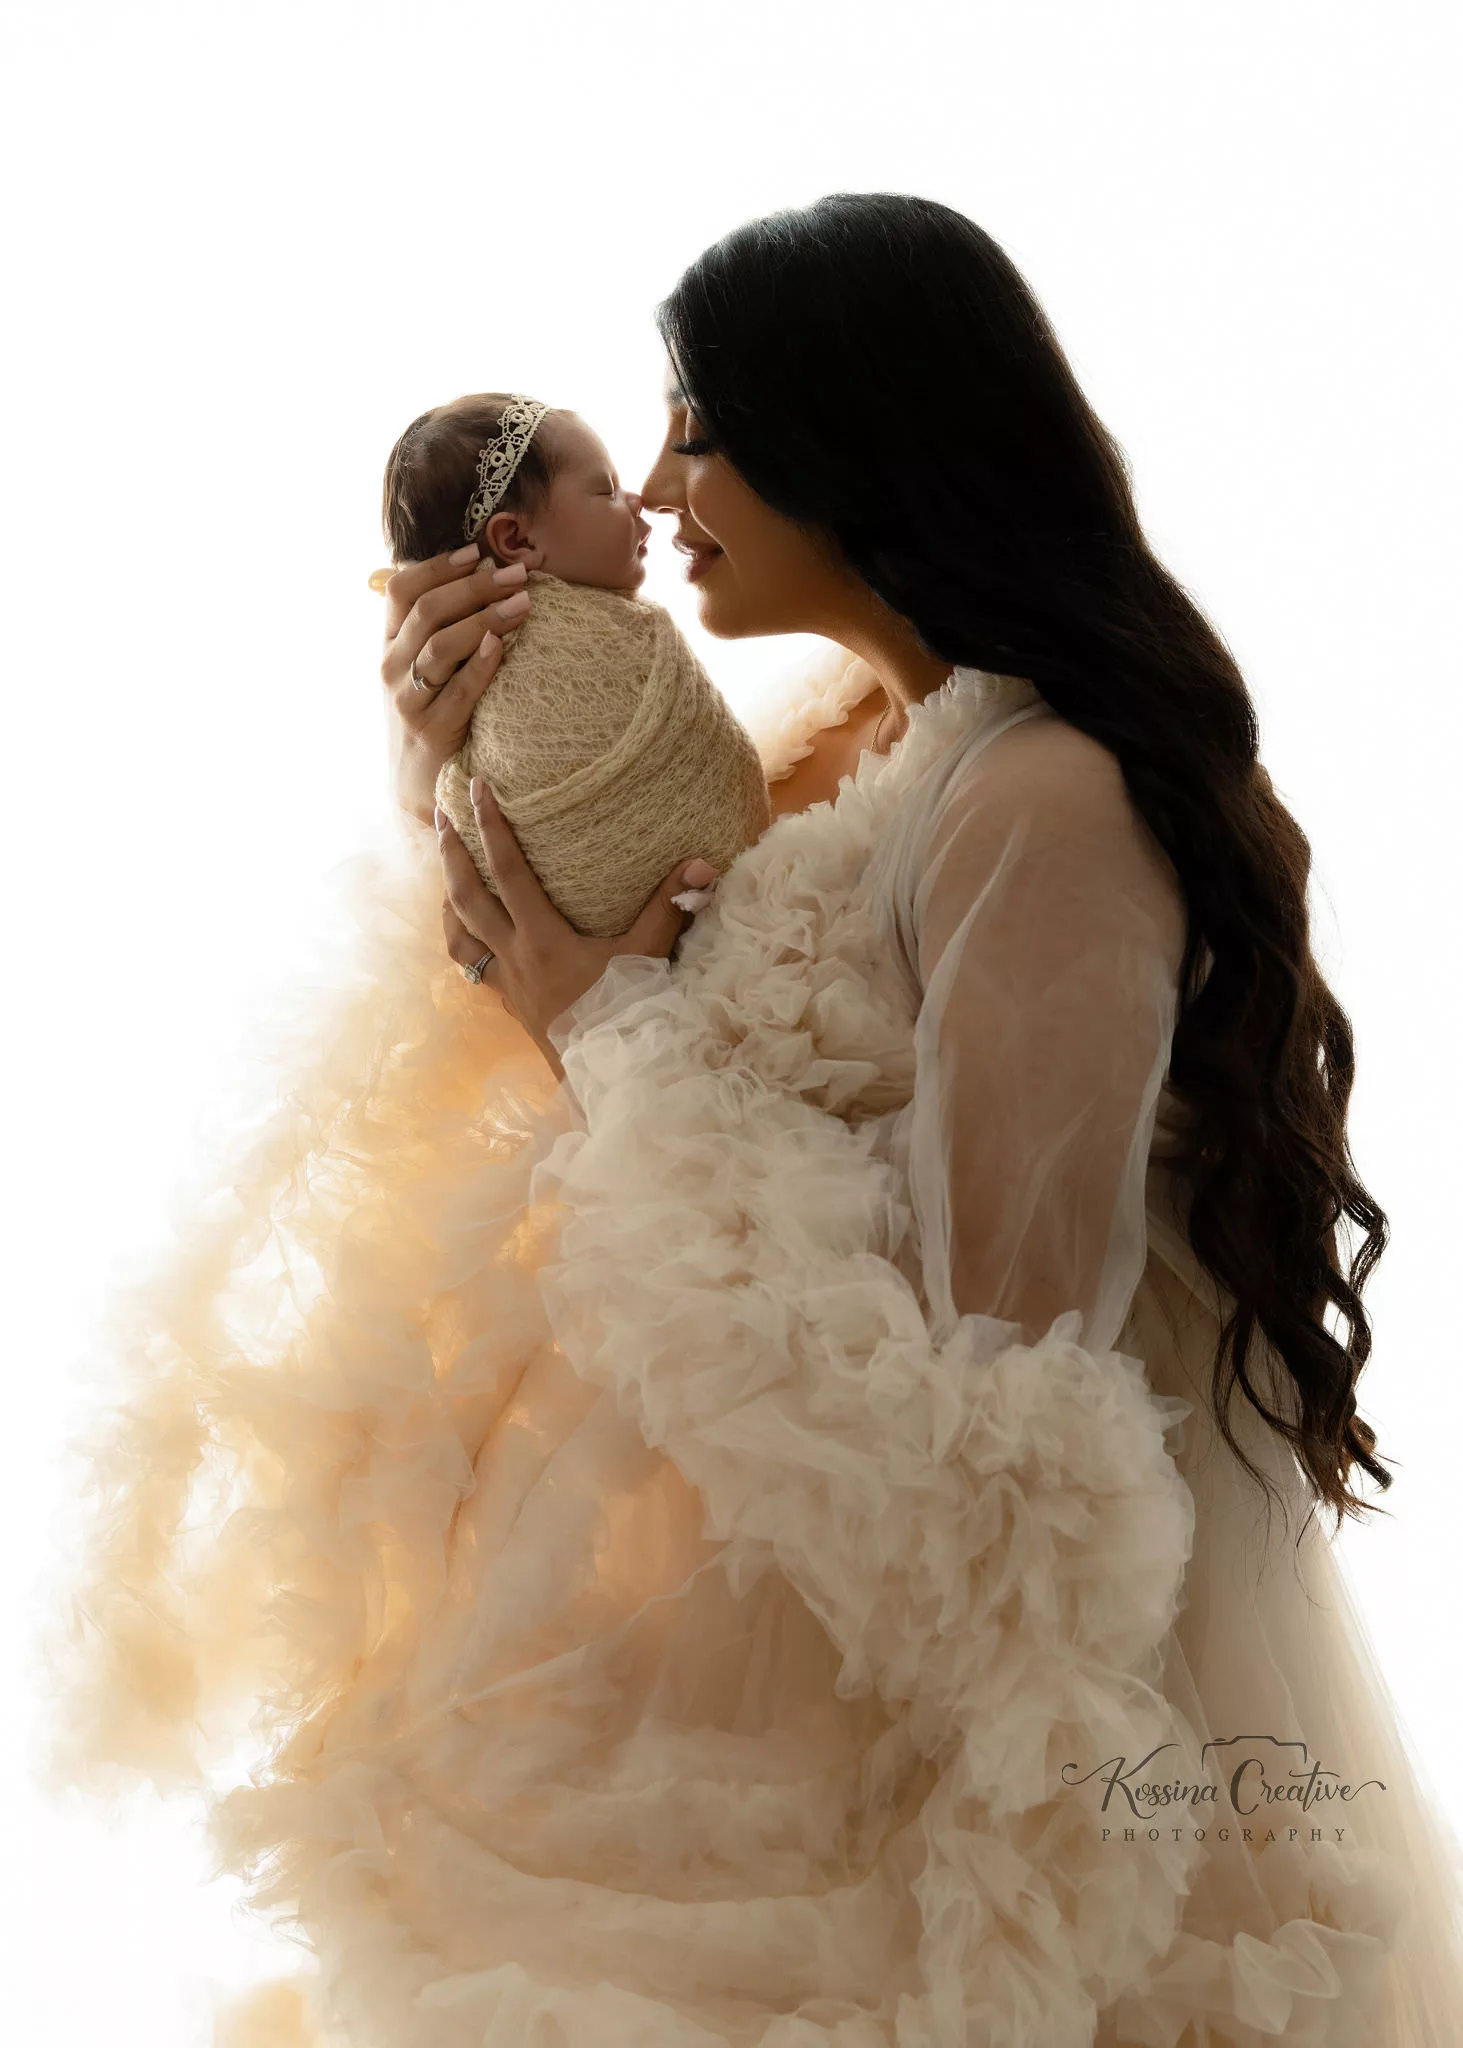 Orlando Family Newborn Photographer Baby Kid Photo studio silhouette nose to nose poofy cream dress mom and baby snuggle